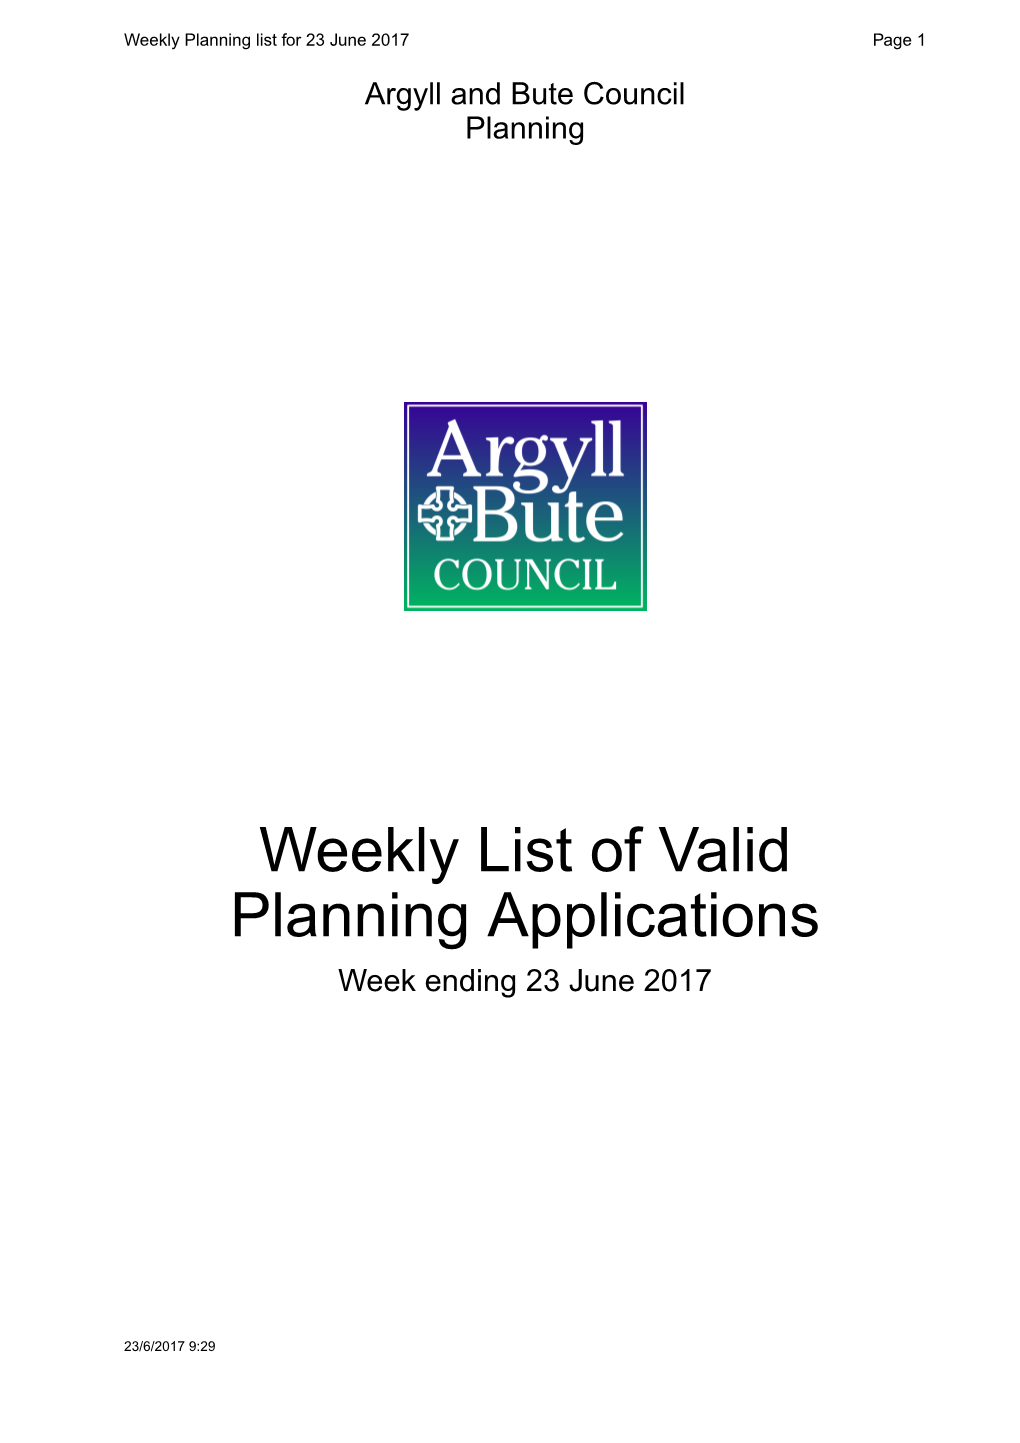 Weekly List of Valid Planning Applications 23Rd June 2017.Pdf